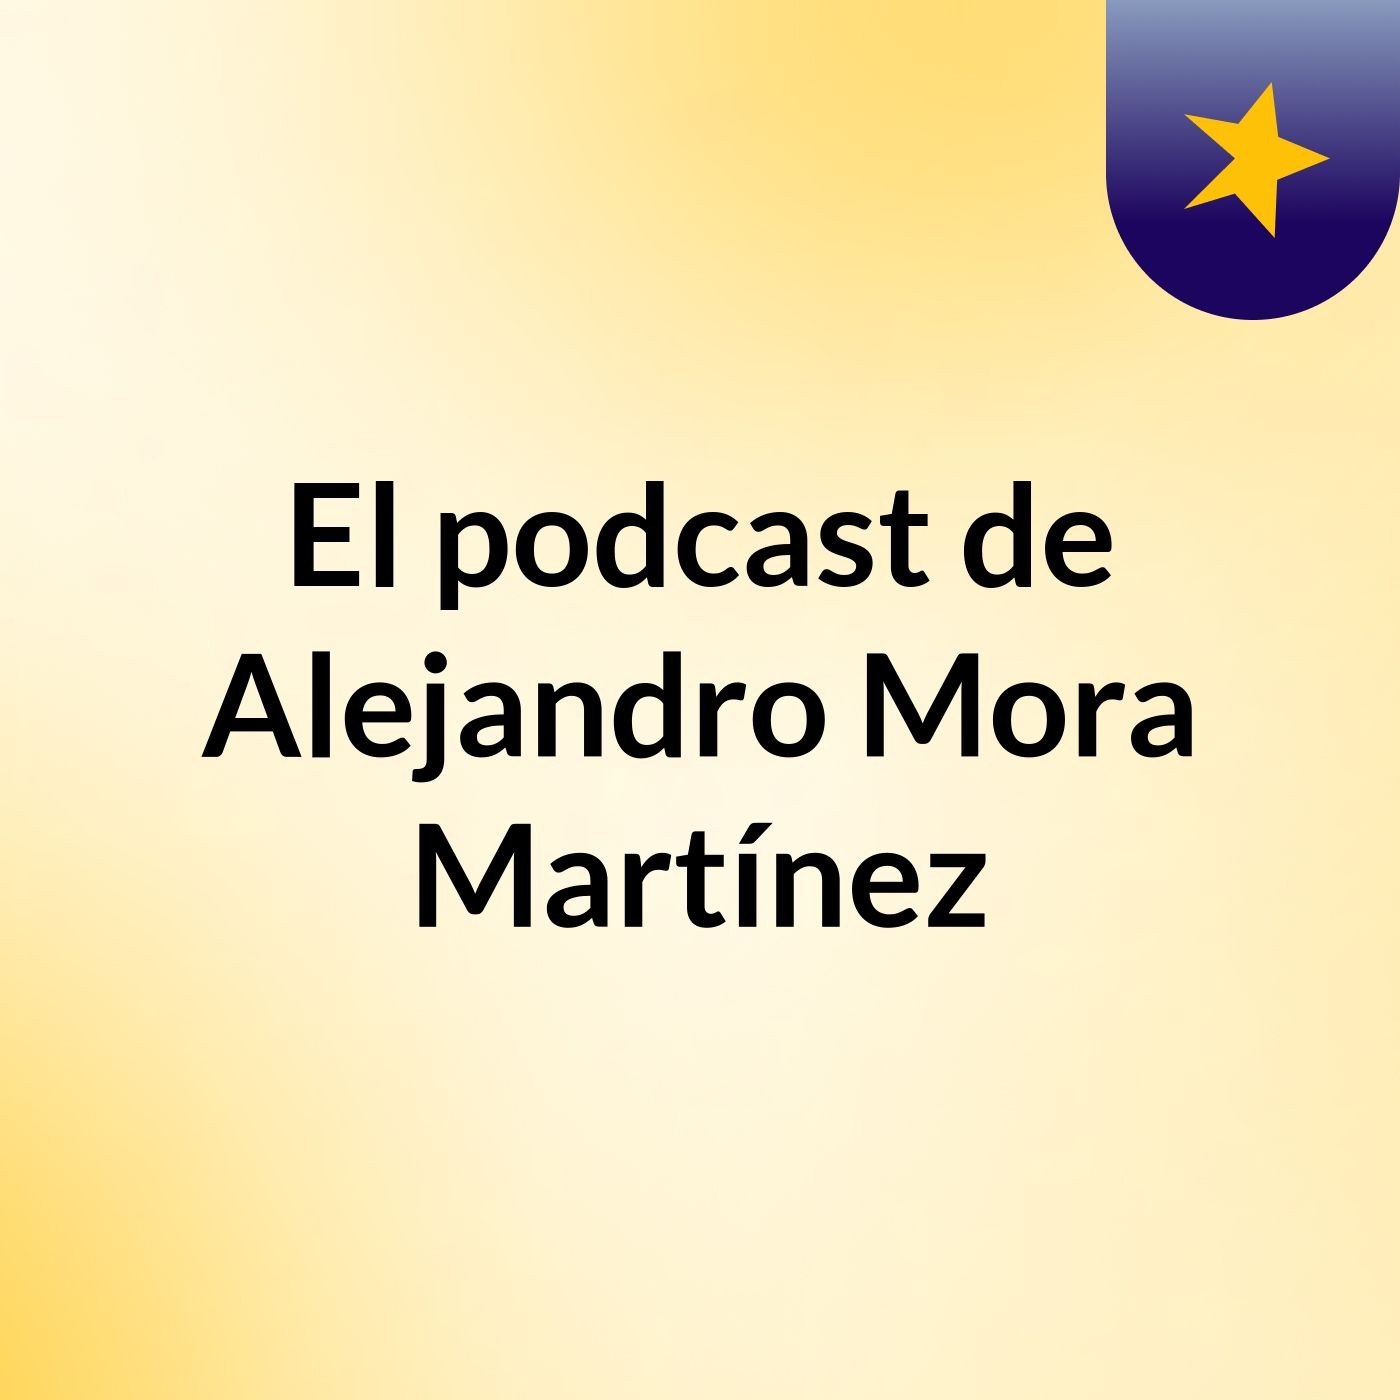 El podcast de Alejandro Mora Martínez